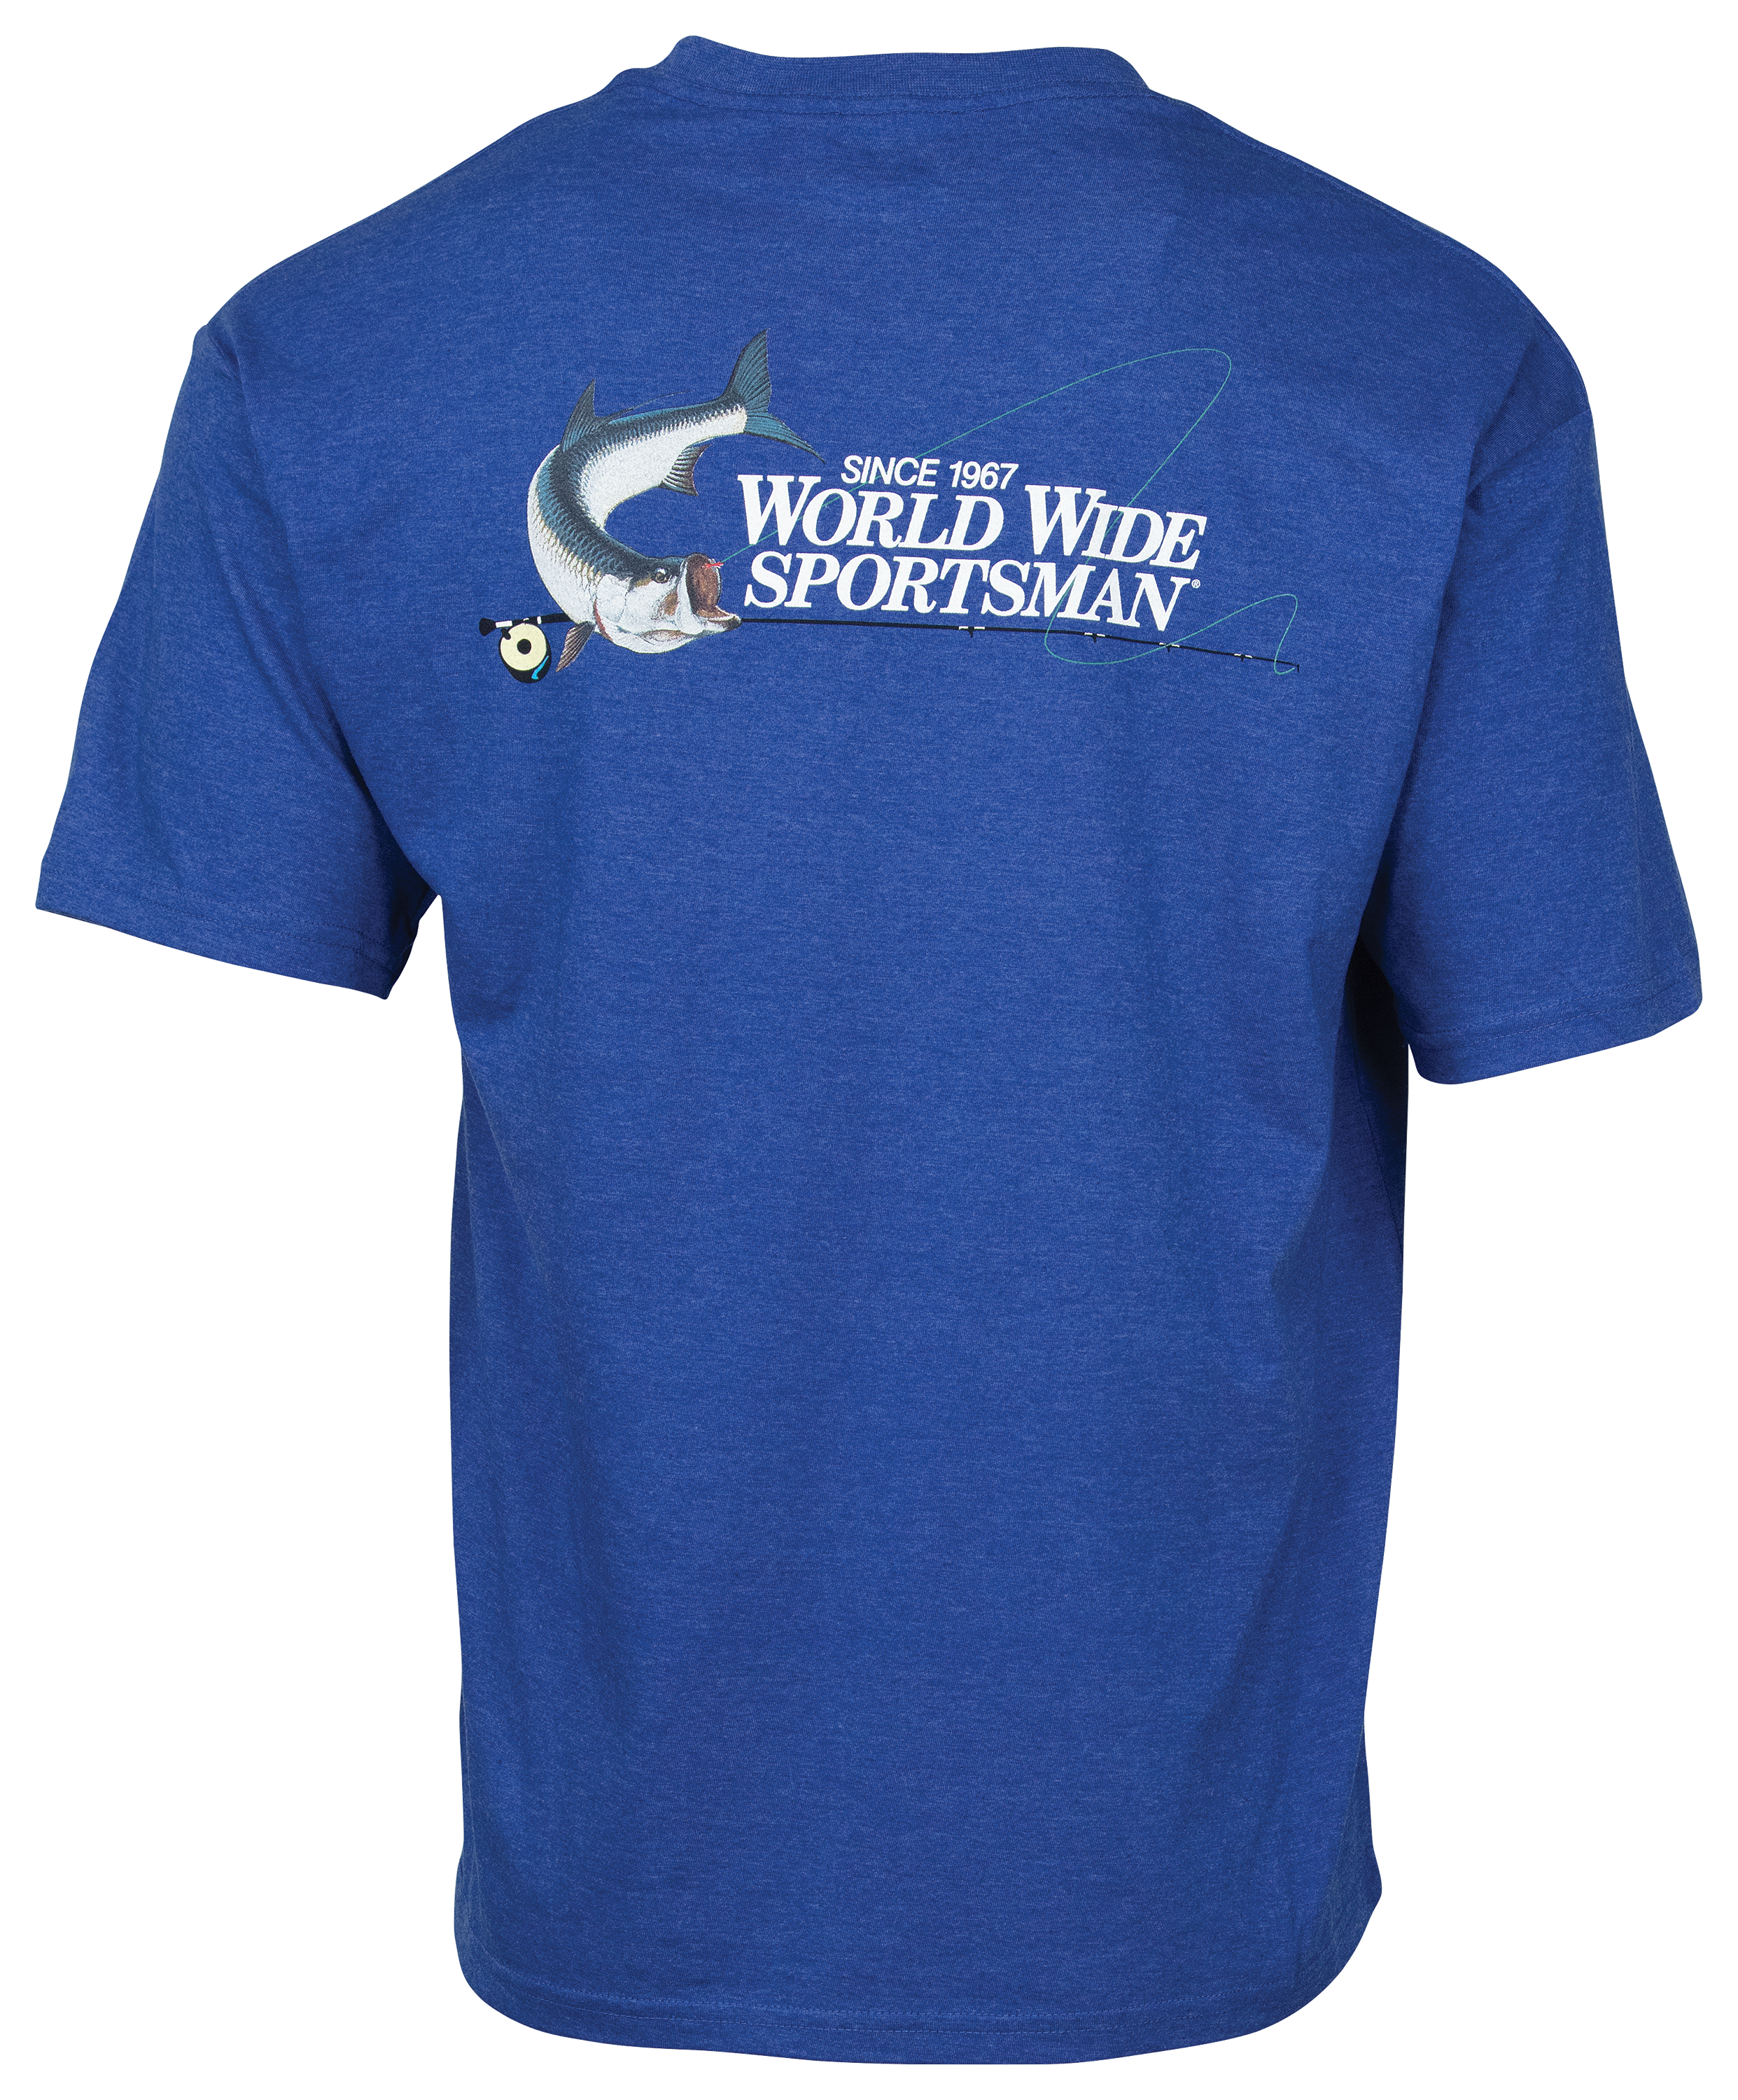 World Wide Sportsman Logo Graphic Short-Sleeve T-Shirt for Men - Royal Blue - XL